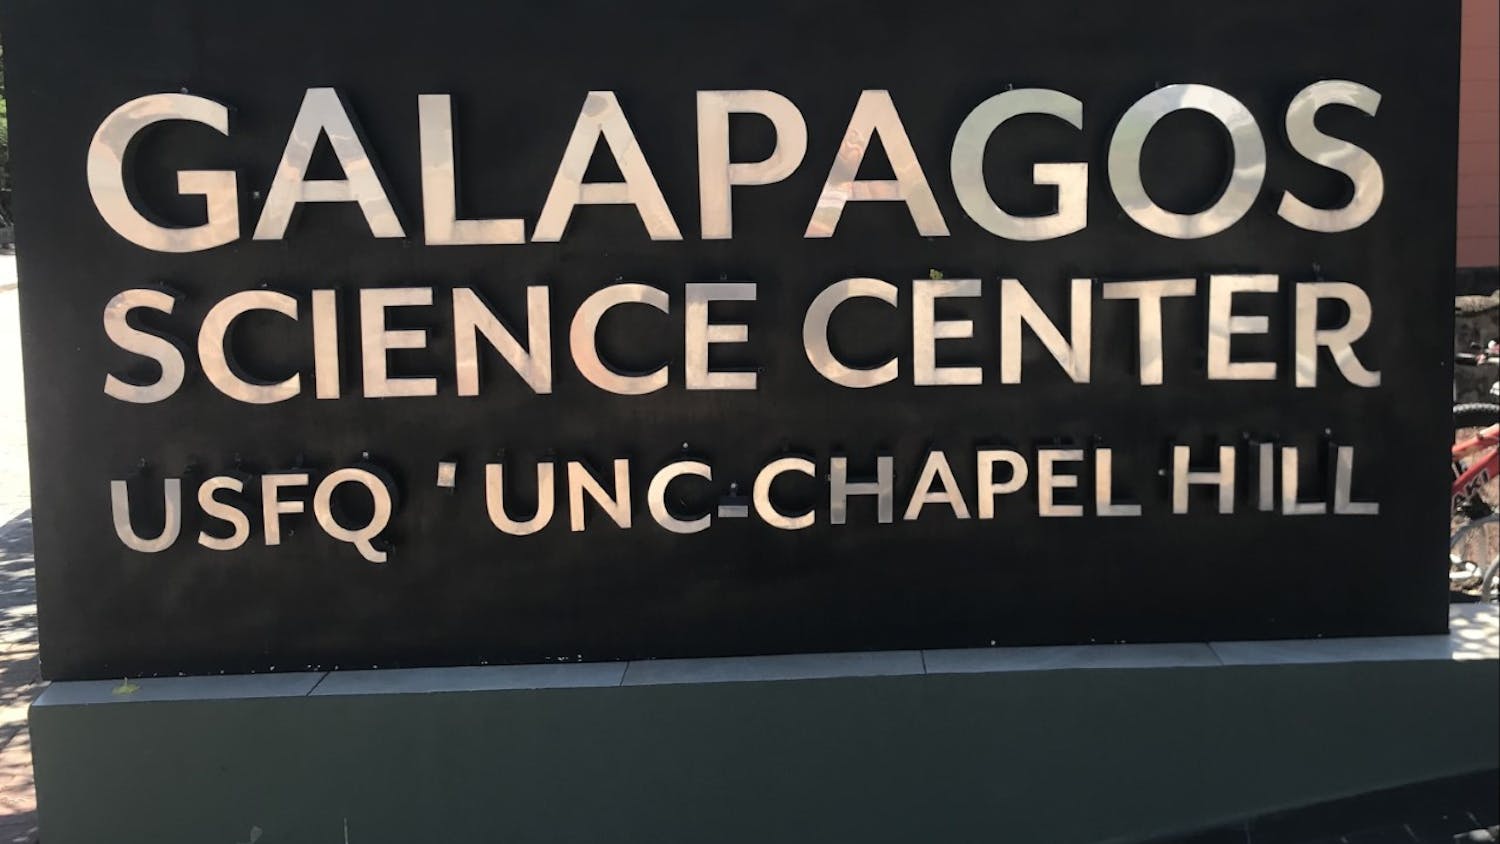 GalapagosScienceCenter.jpg